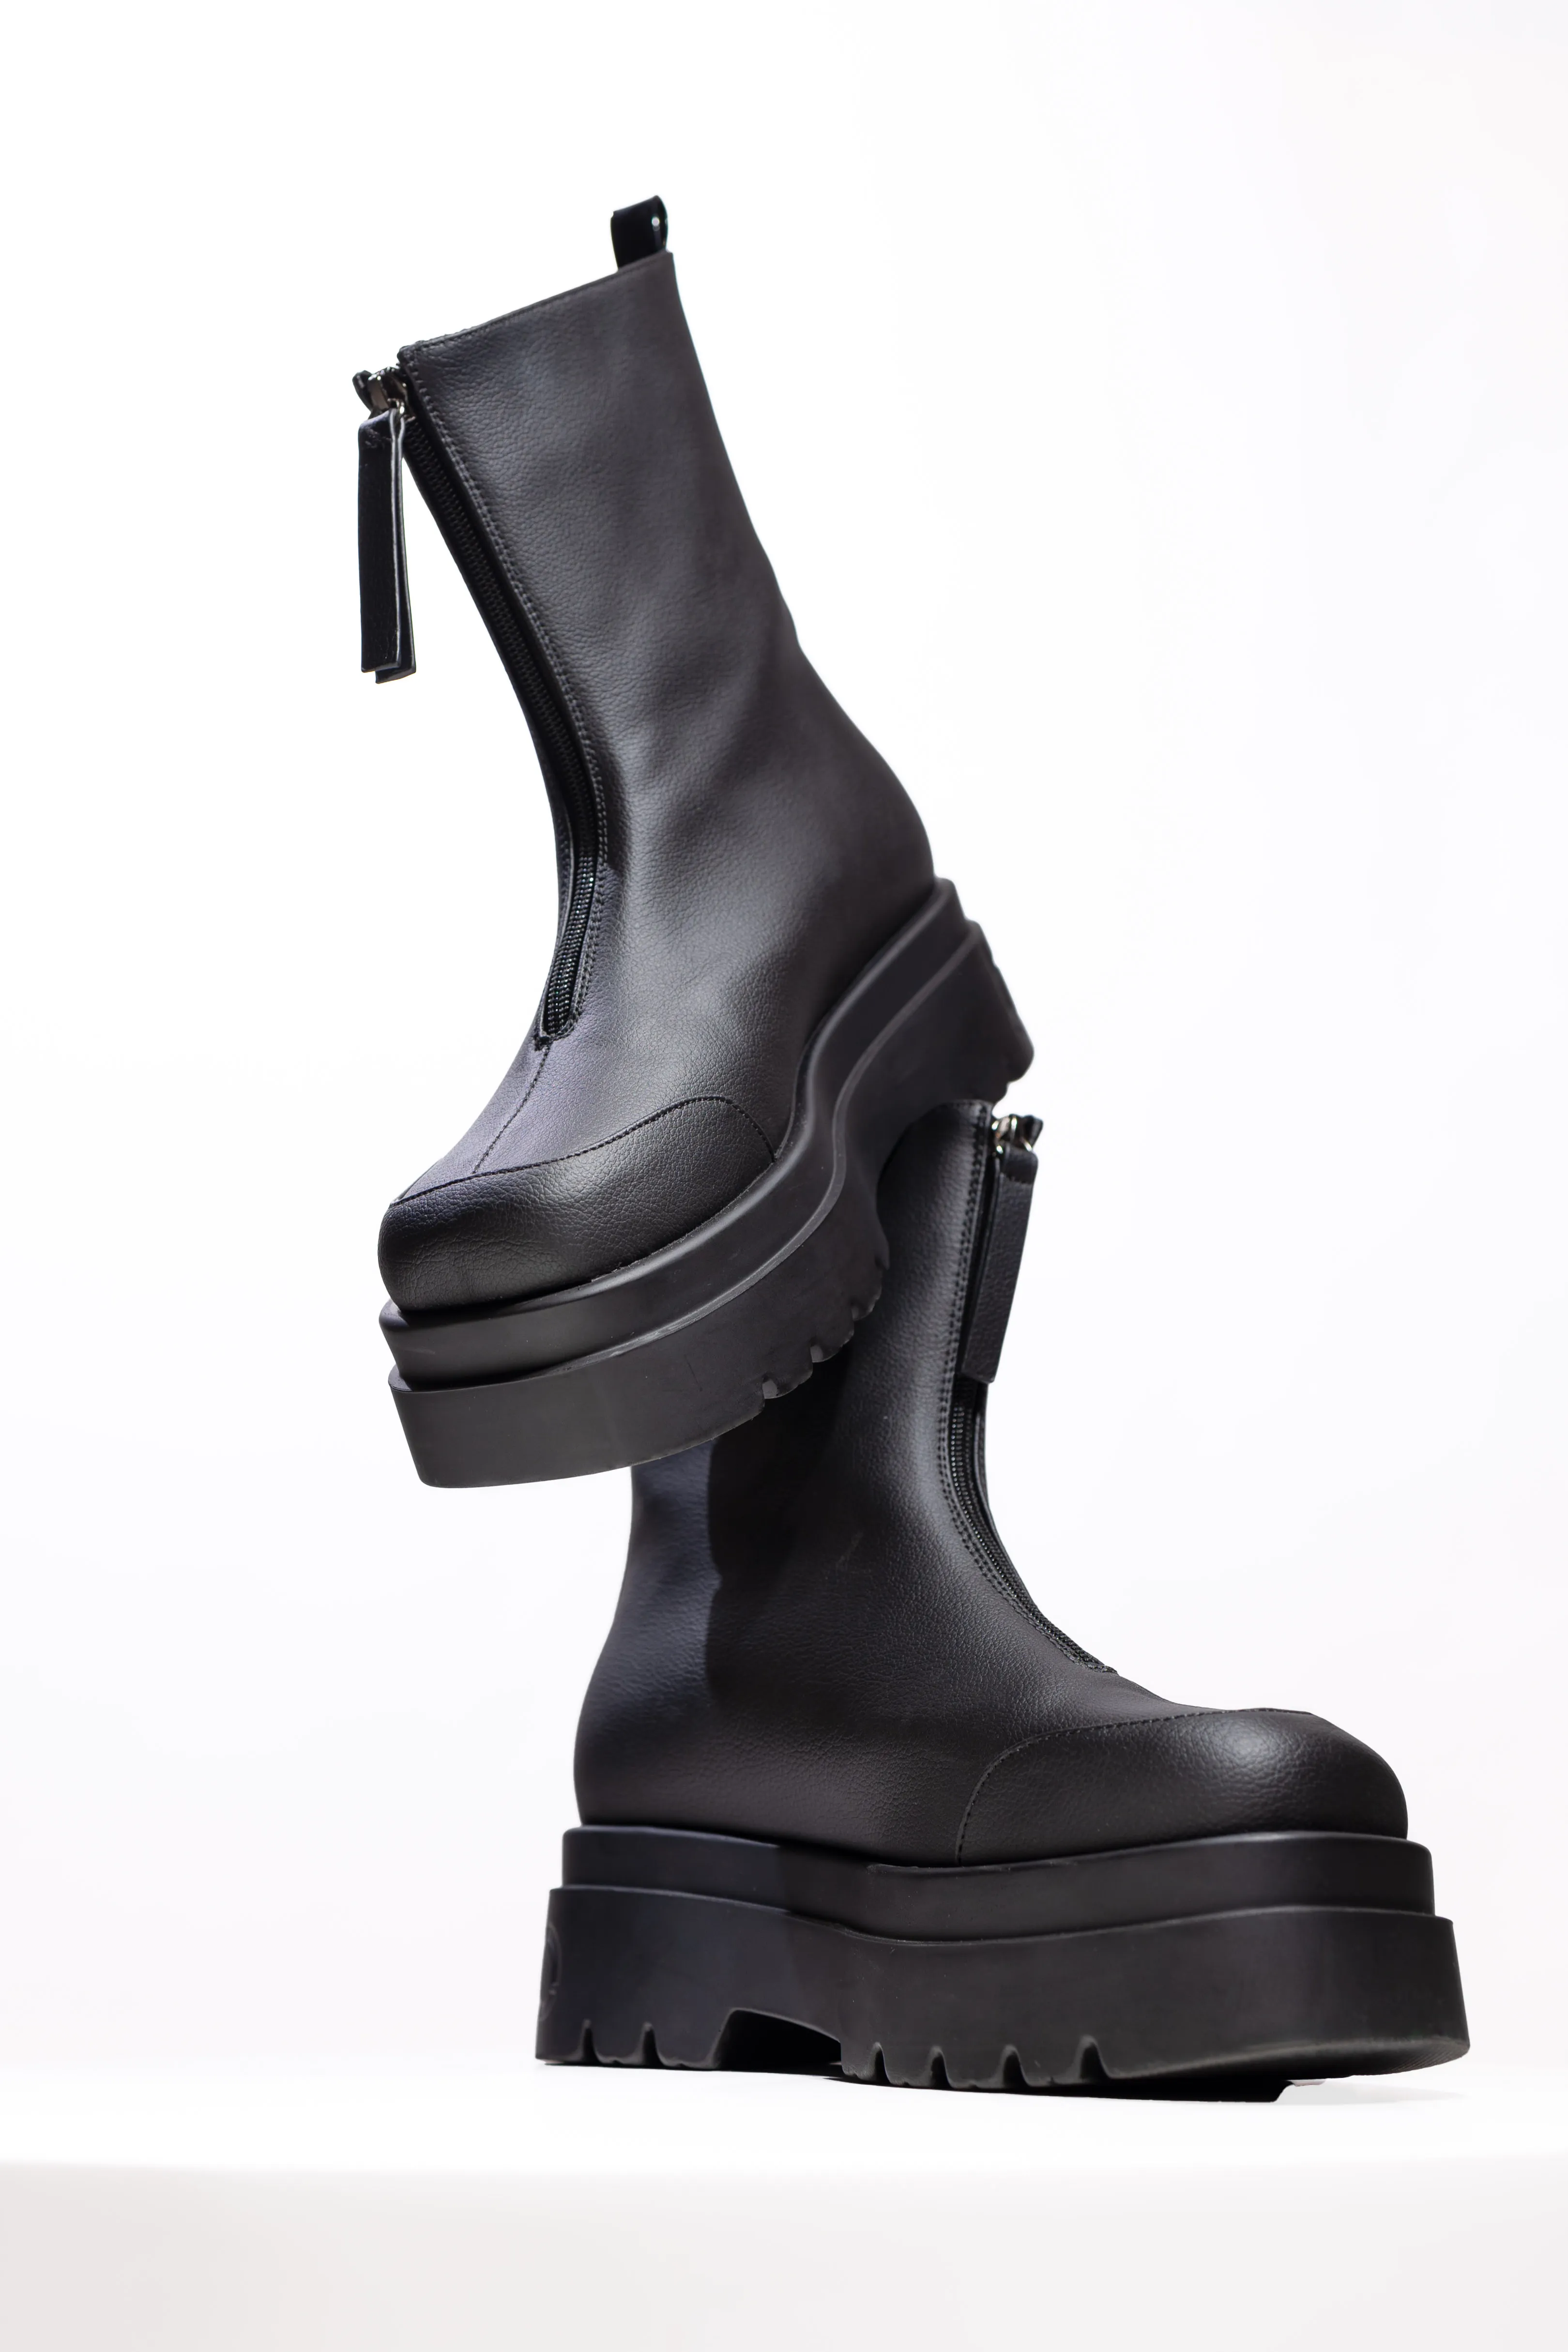 LIO black boots - VEGAN grape leather